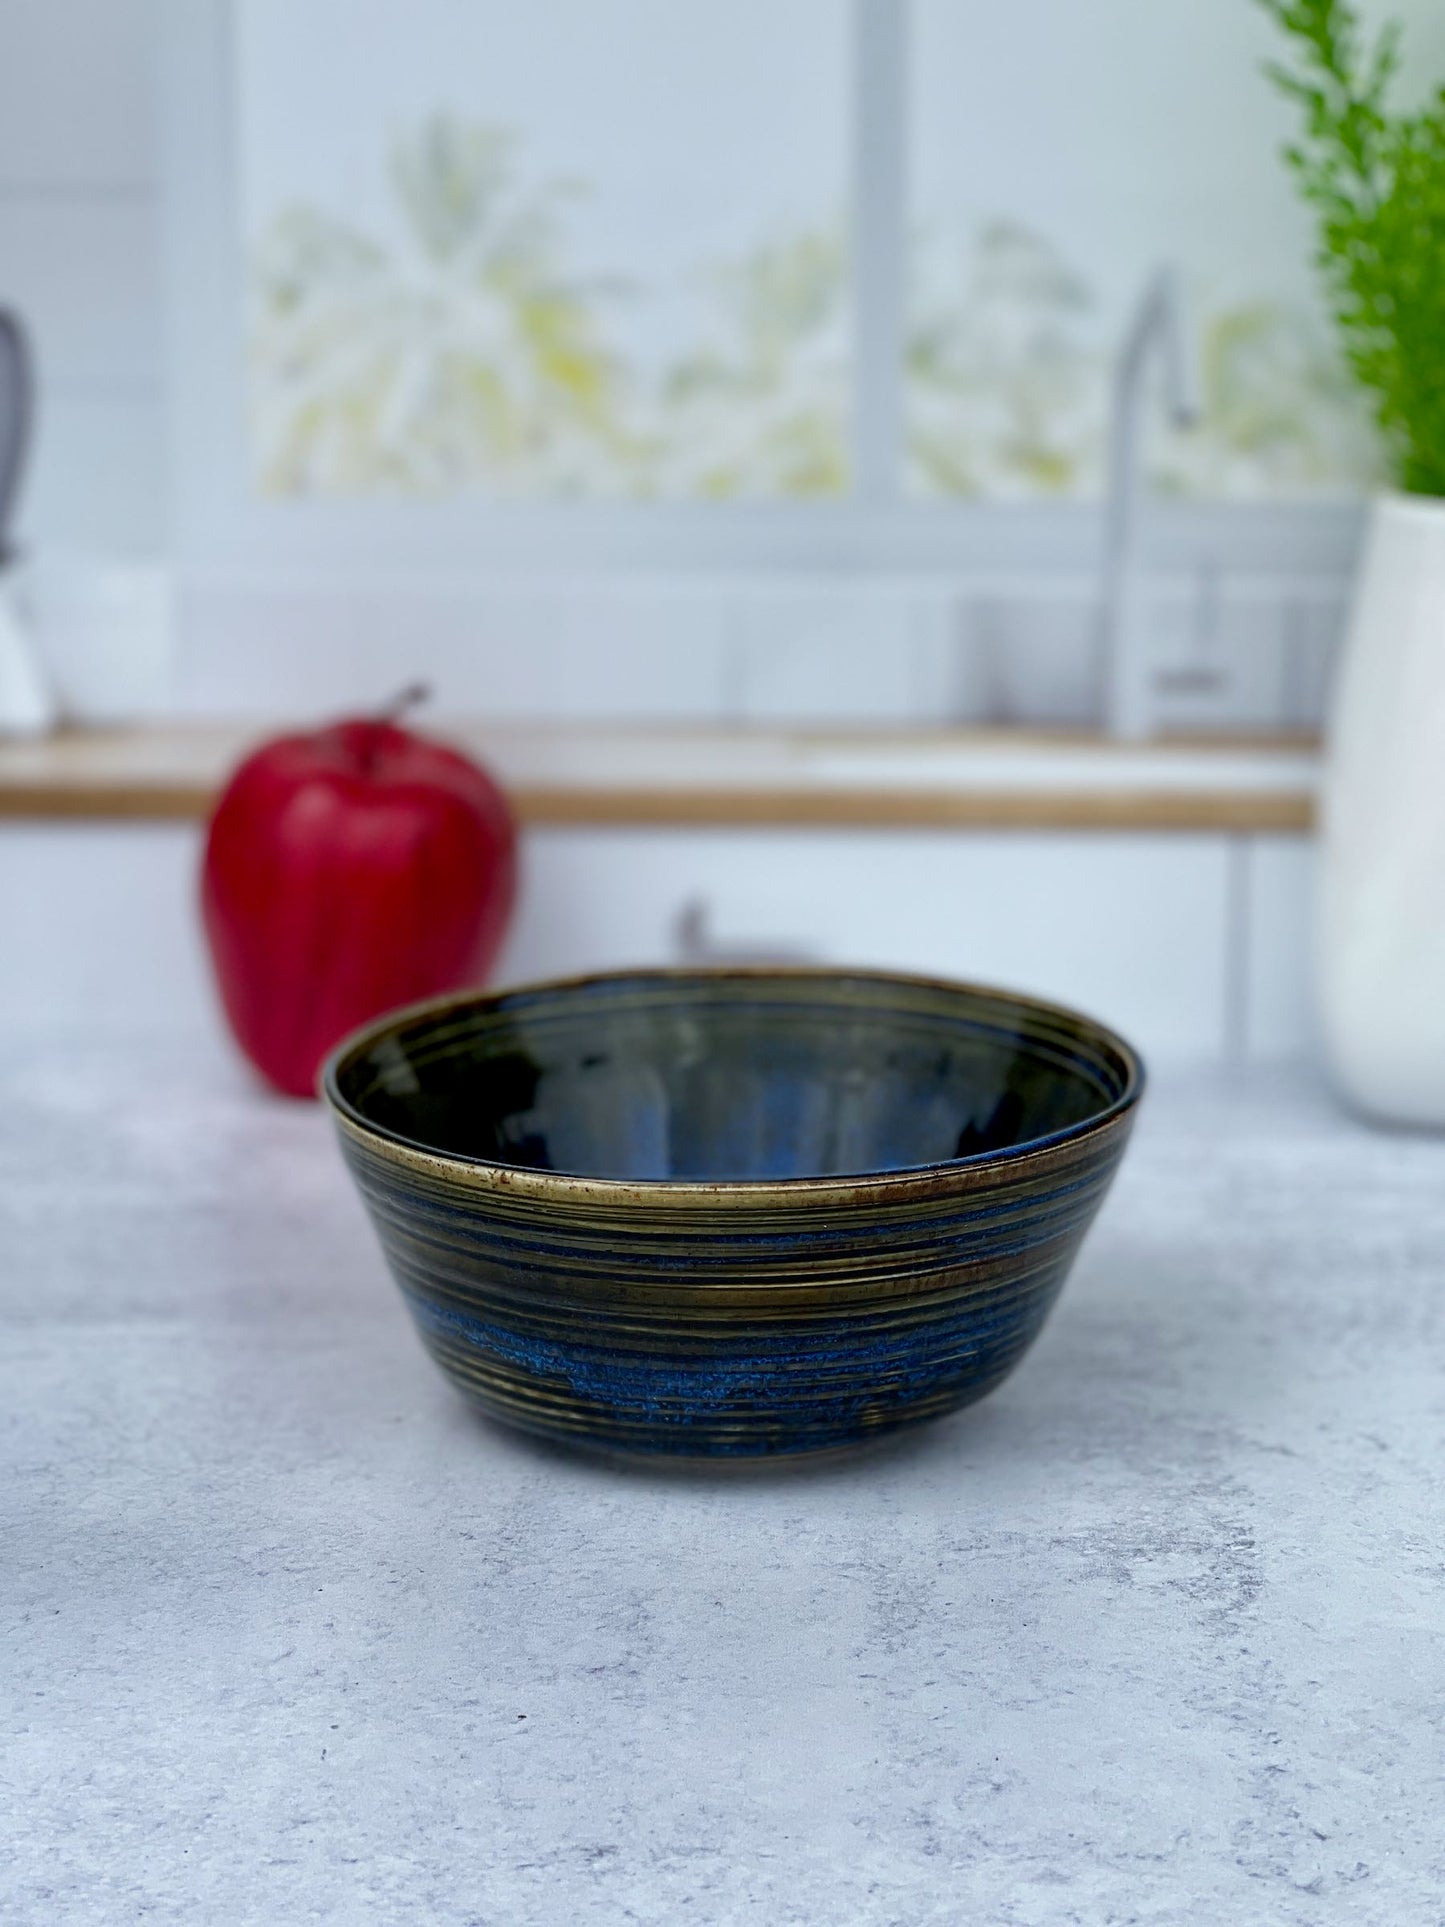 Small Blue Rutile Glazed Wheel Thrown Porcelain Bowl